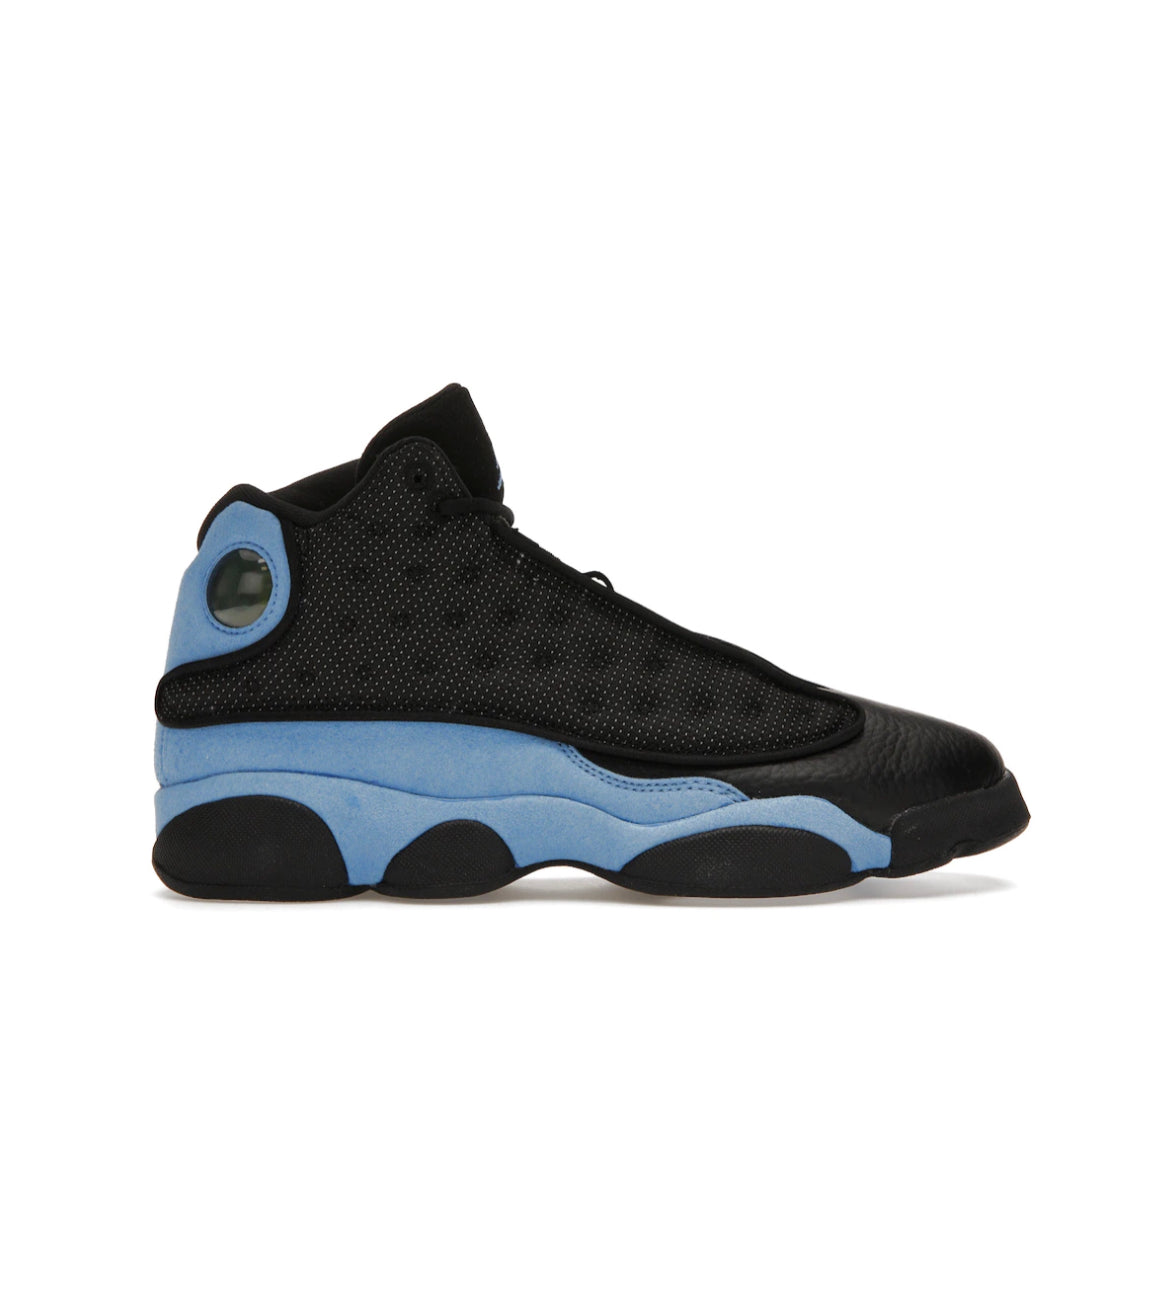 Jordan 13 Retro ‘Black Umiversity Blue’ (GS) 884129-041